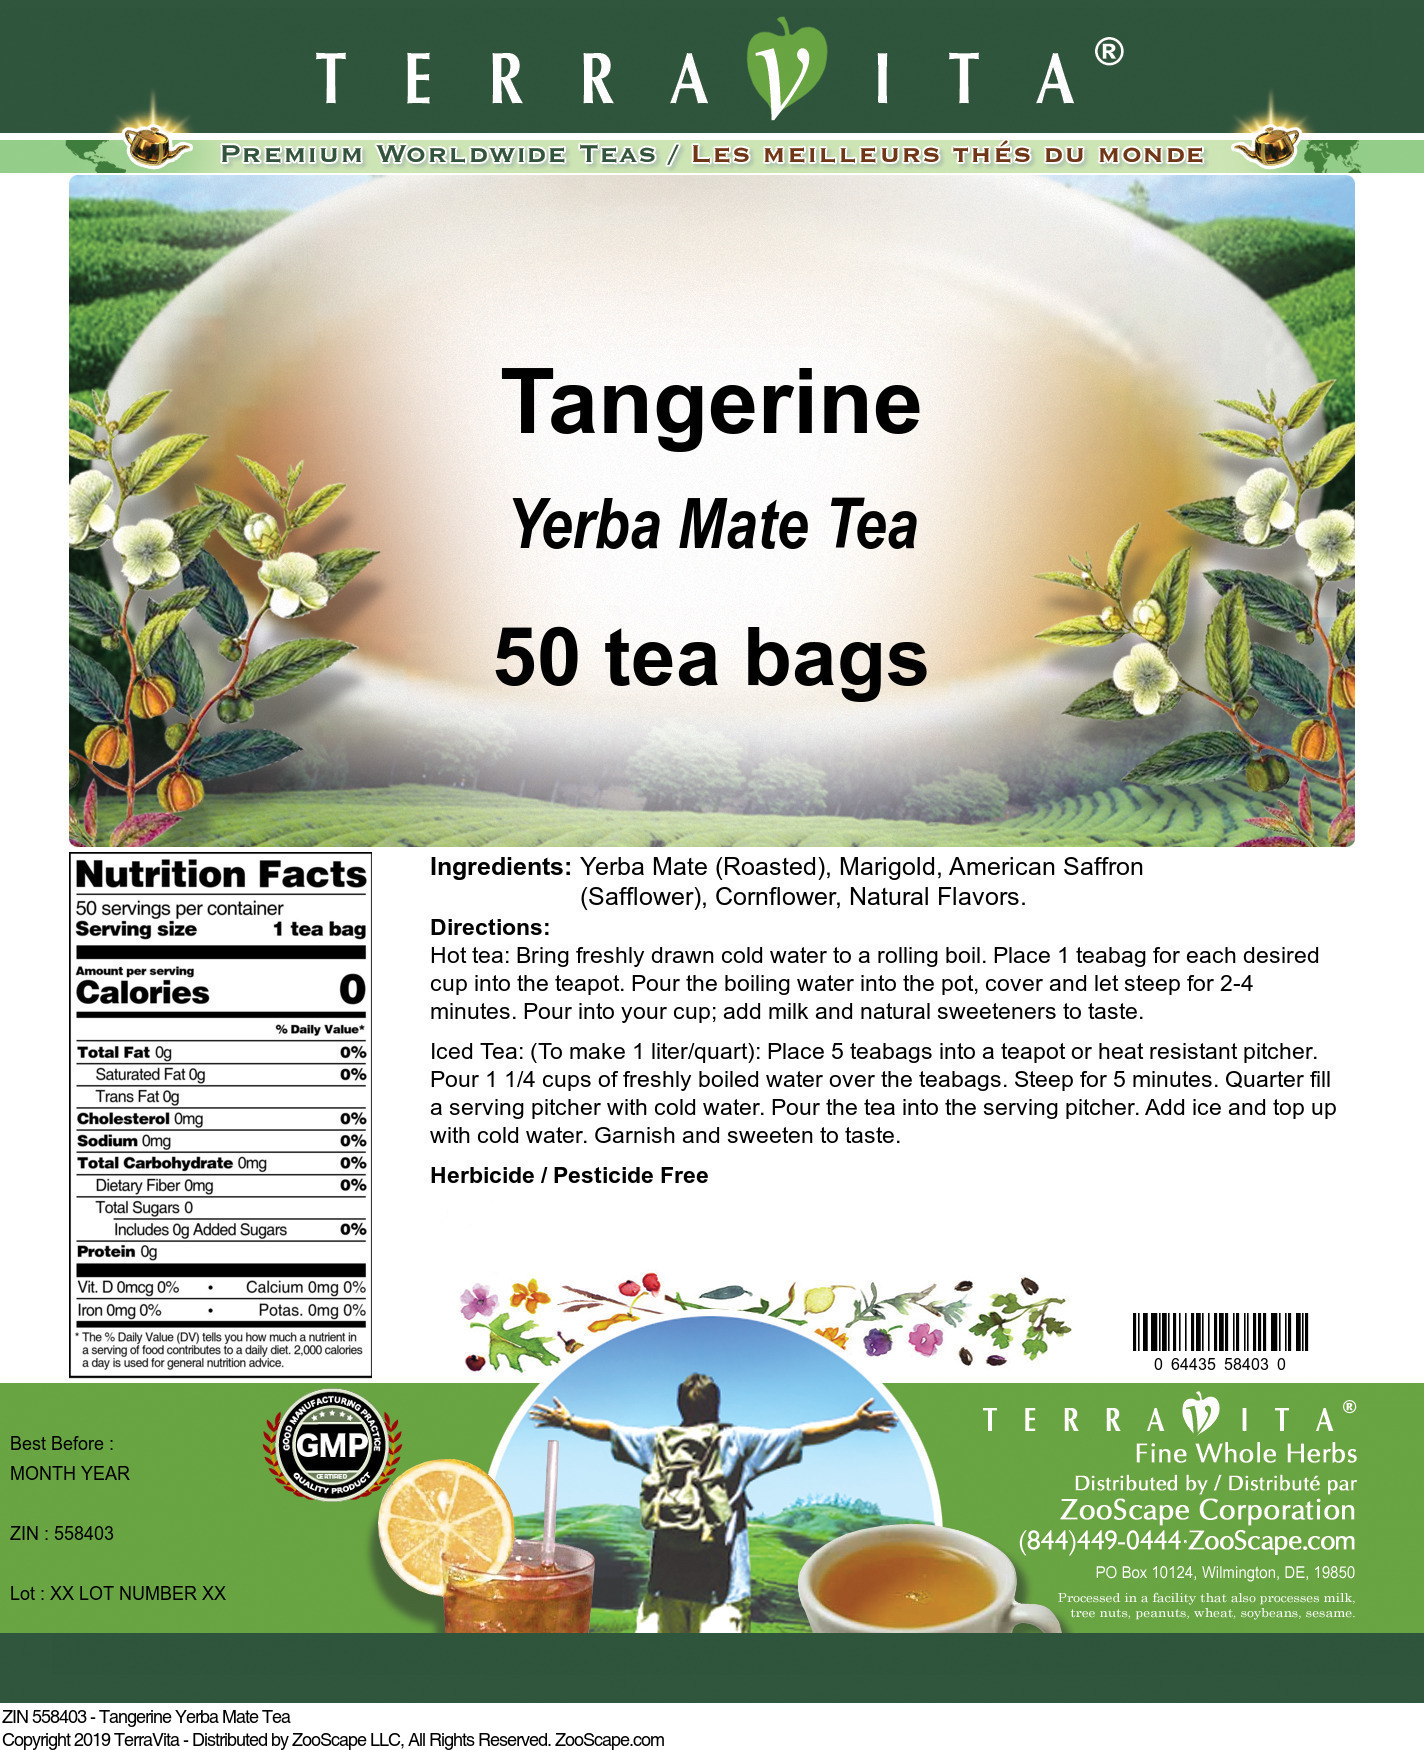 Tangerine Yerba Mate Tea - Label